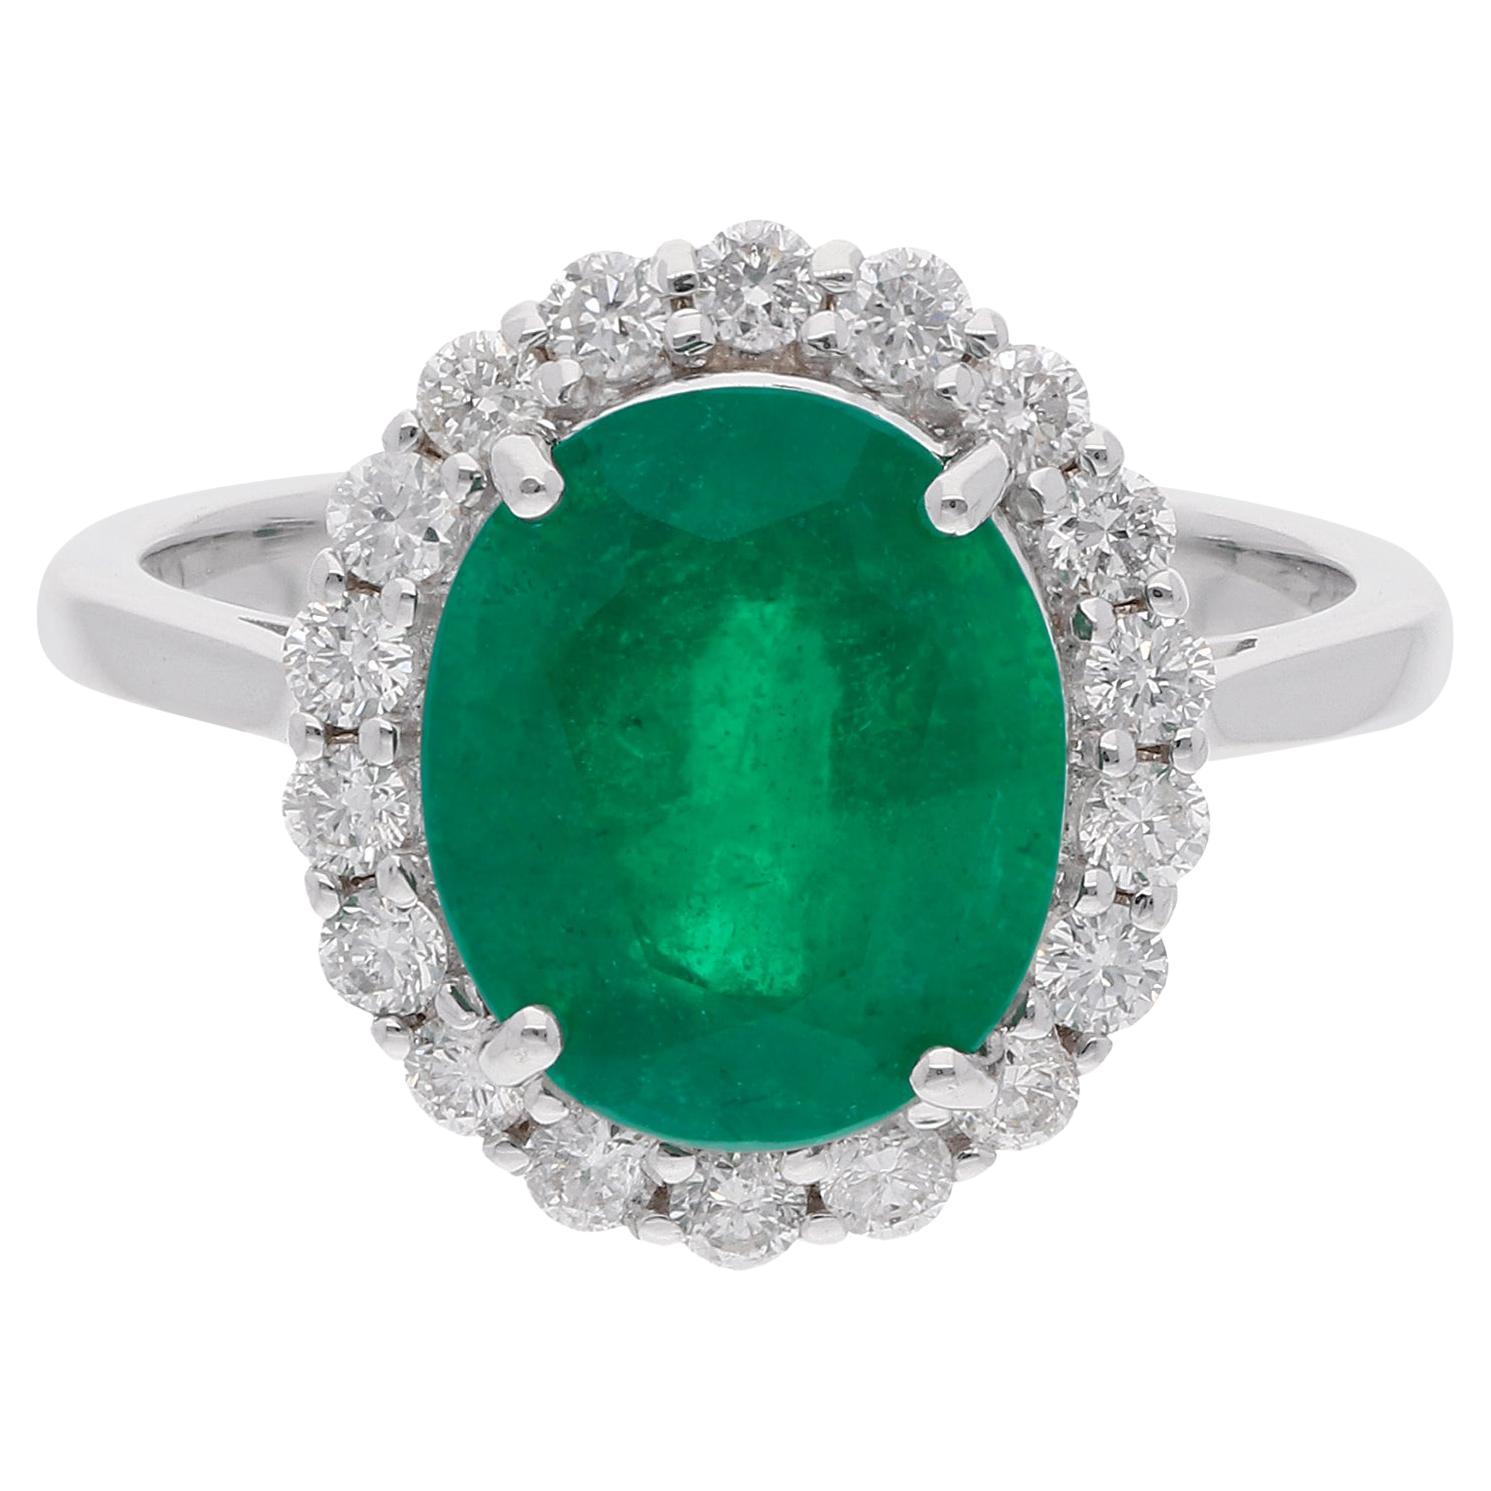 Oval Natural Emerald Gemstone Cocktail Ring Diamond 14 Karat White Gold Jewelry